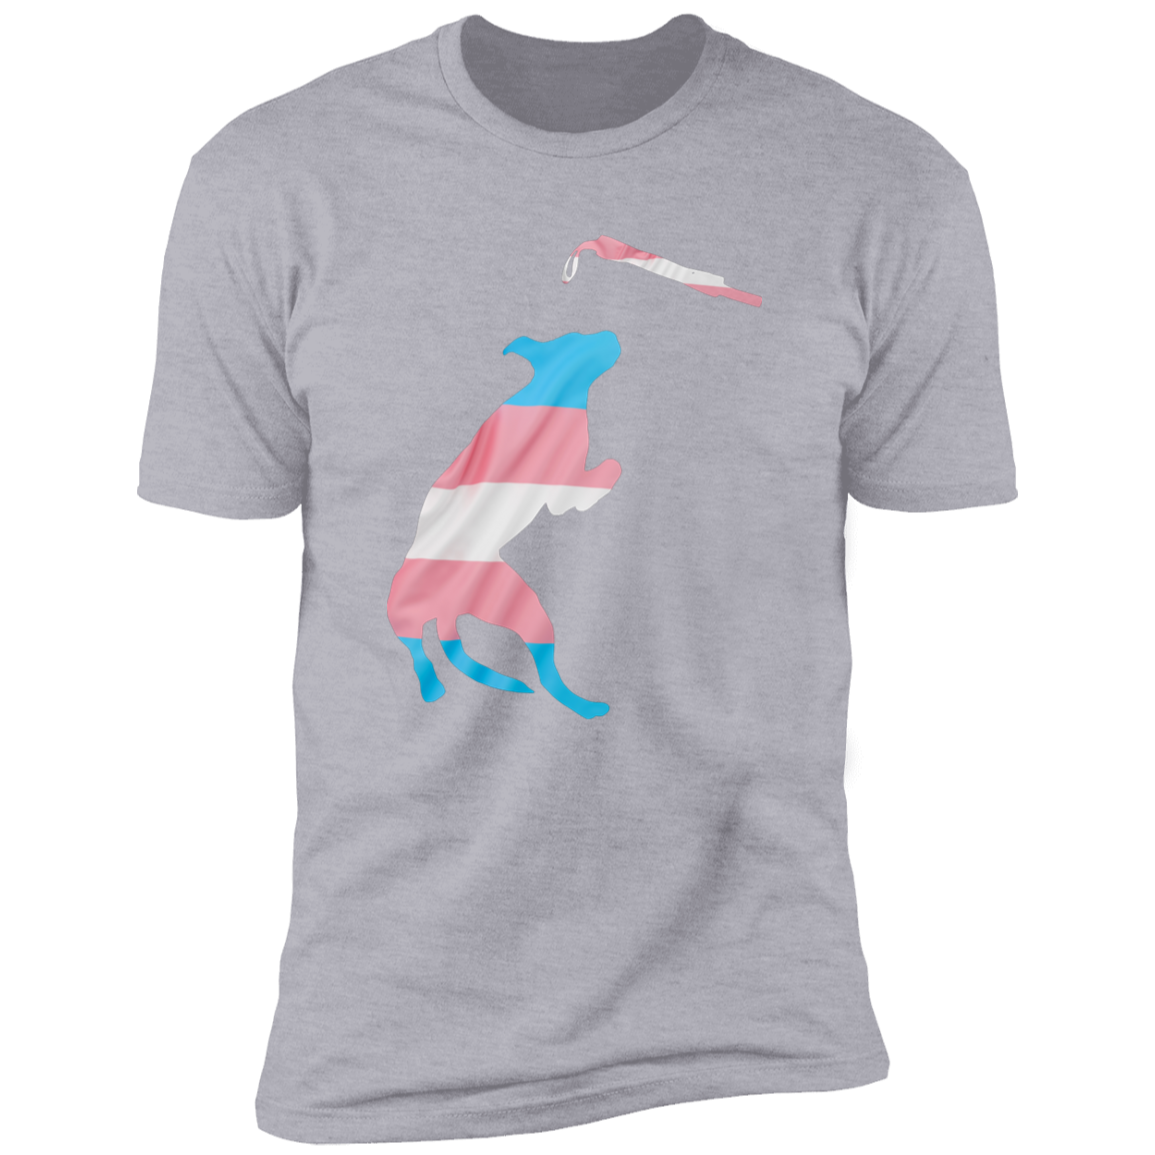 Trans Pride Dock Diving Pride T-shirt, Trans Pride Docking Diving Dog Shirt for humans, in light heather gray